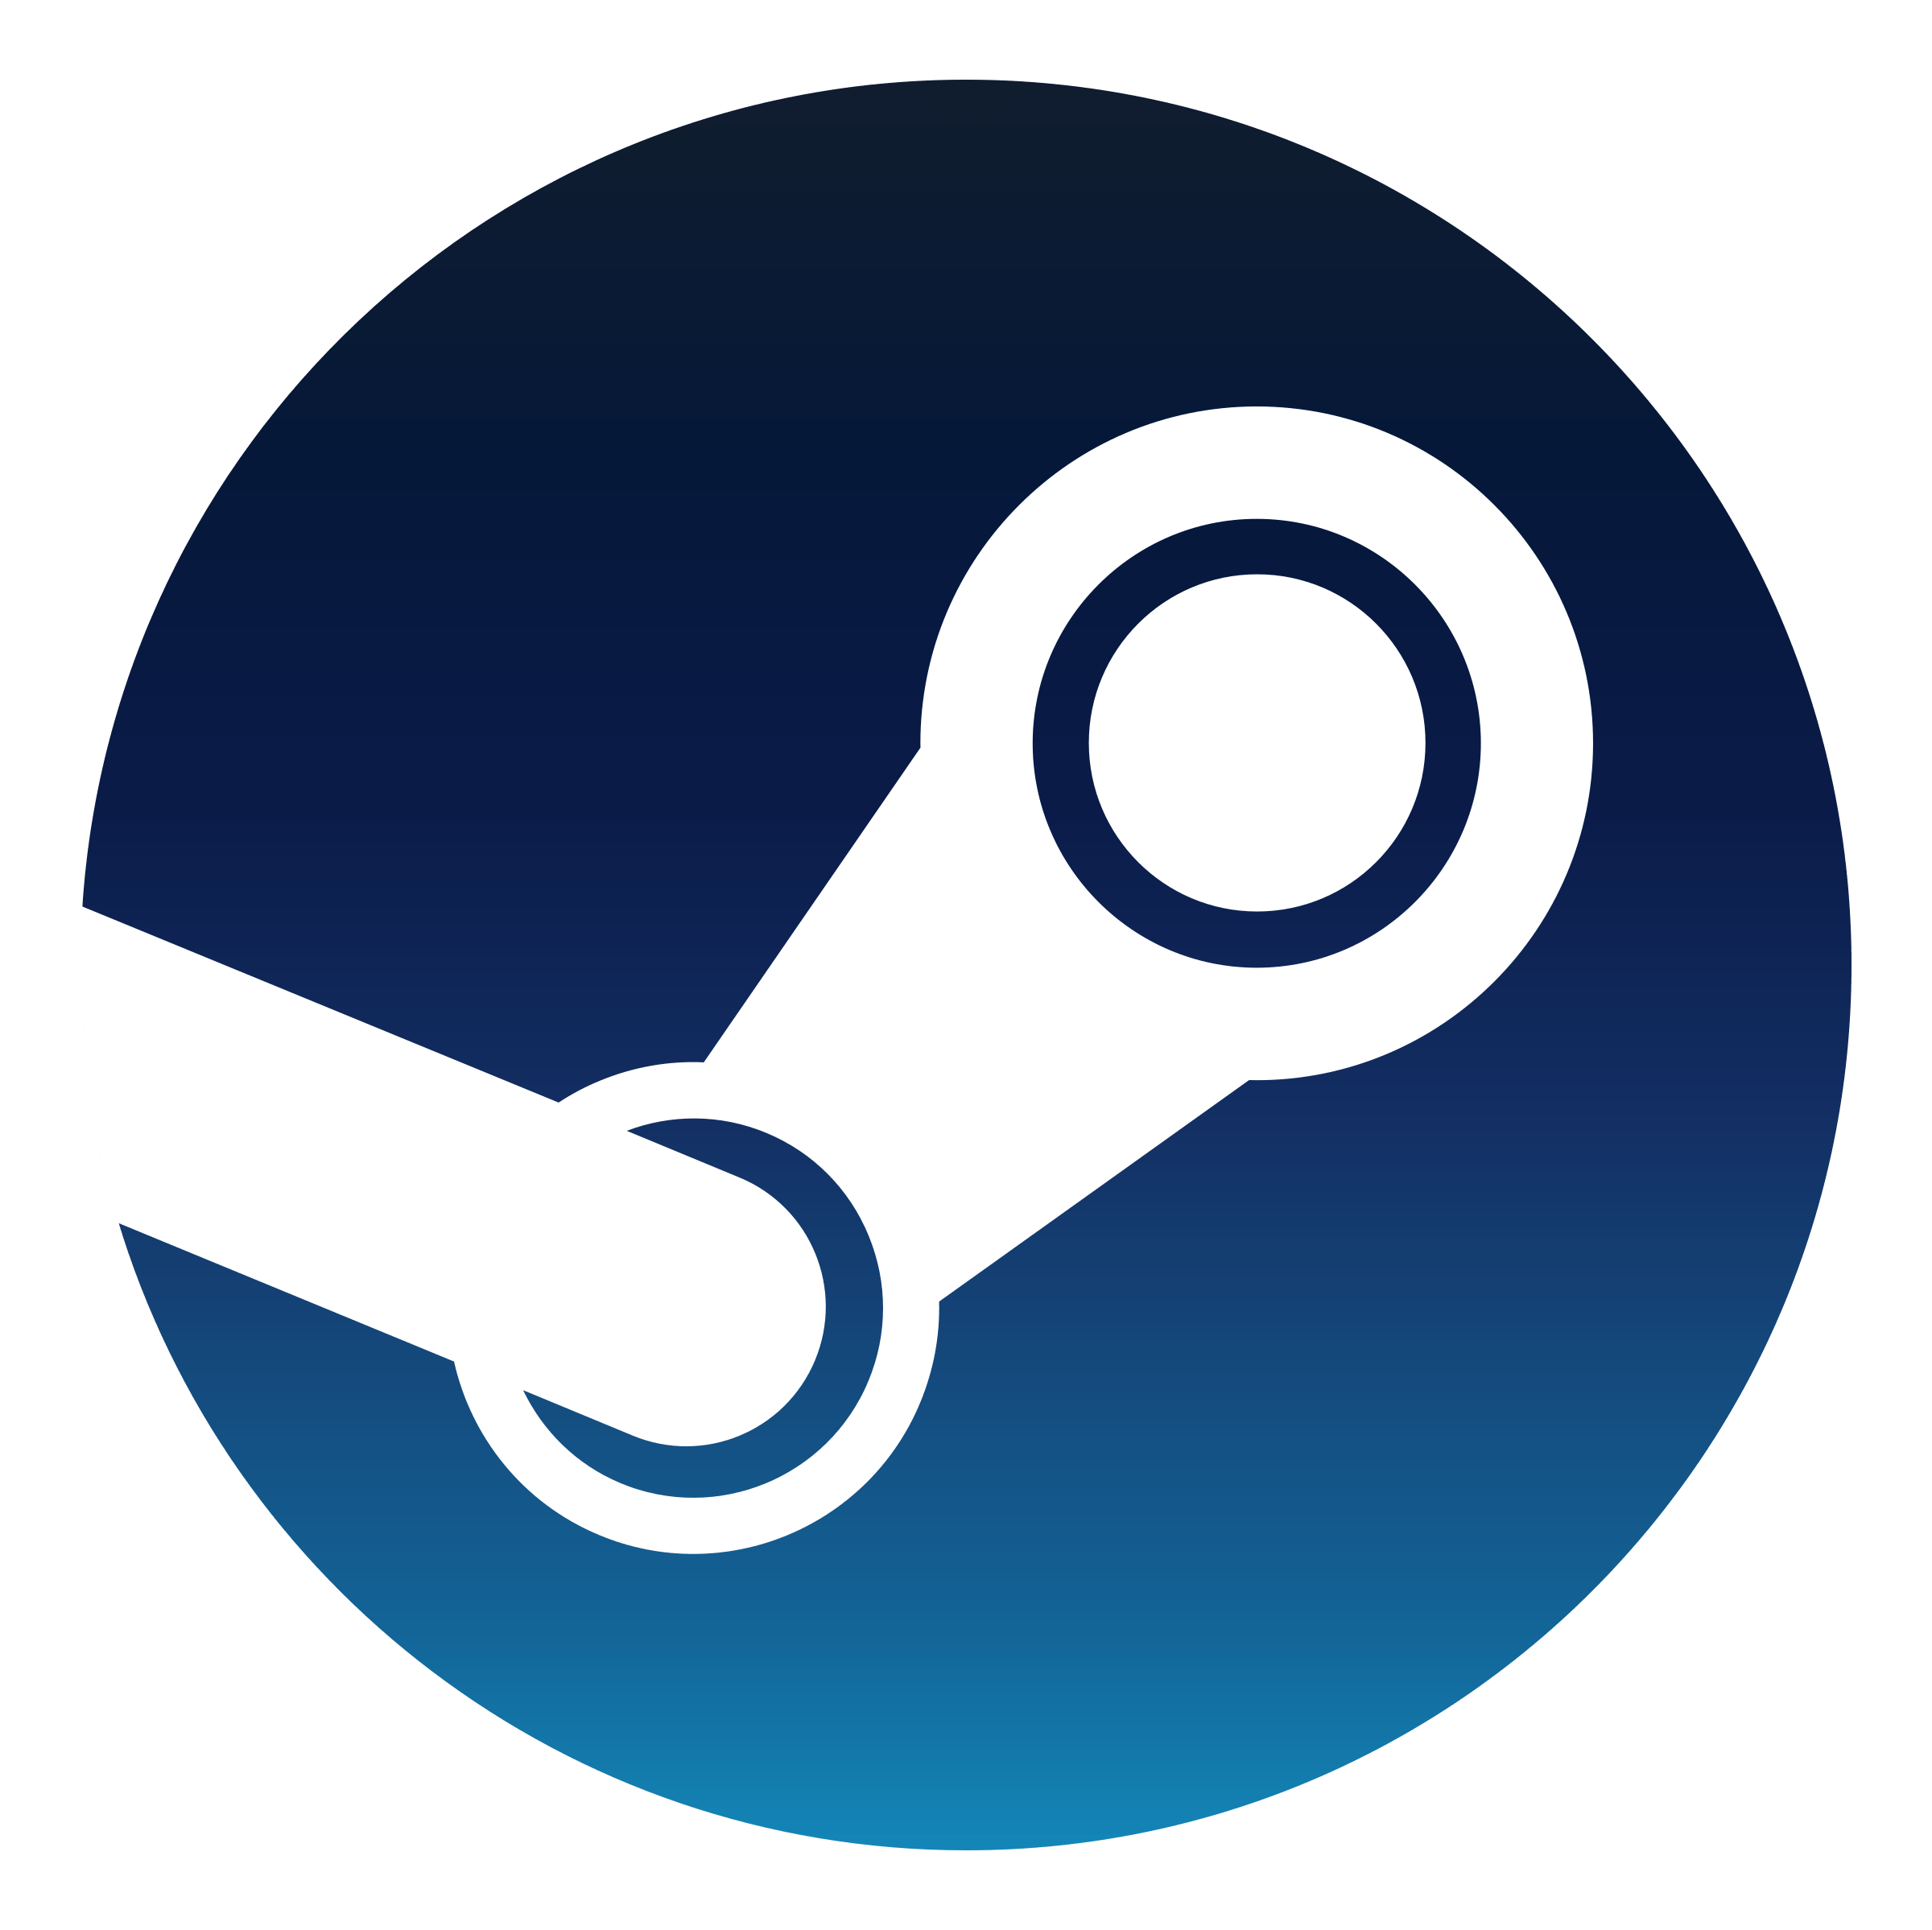 Valve Logo - Steam Logo PNG Transparent & SVG Vector - Freebie Supply